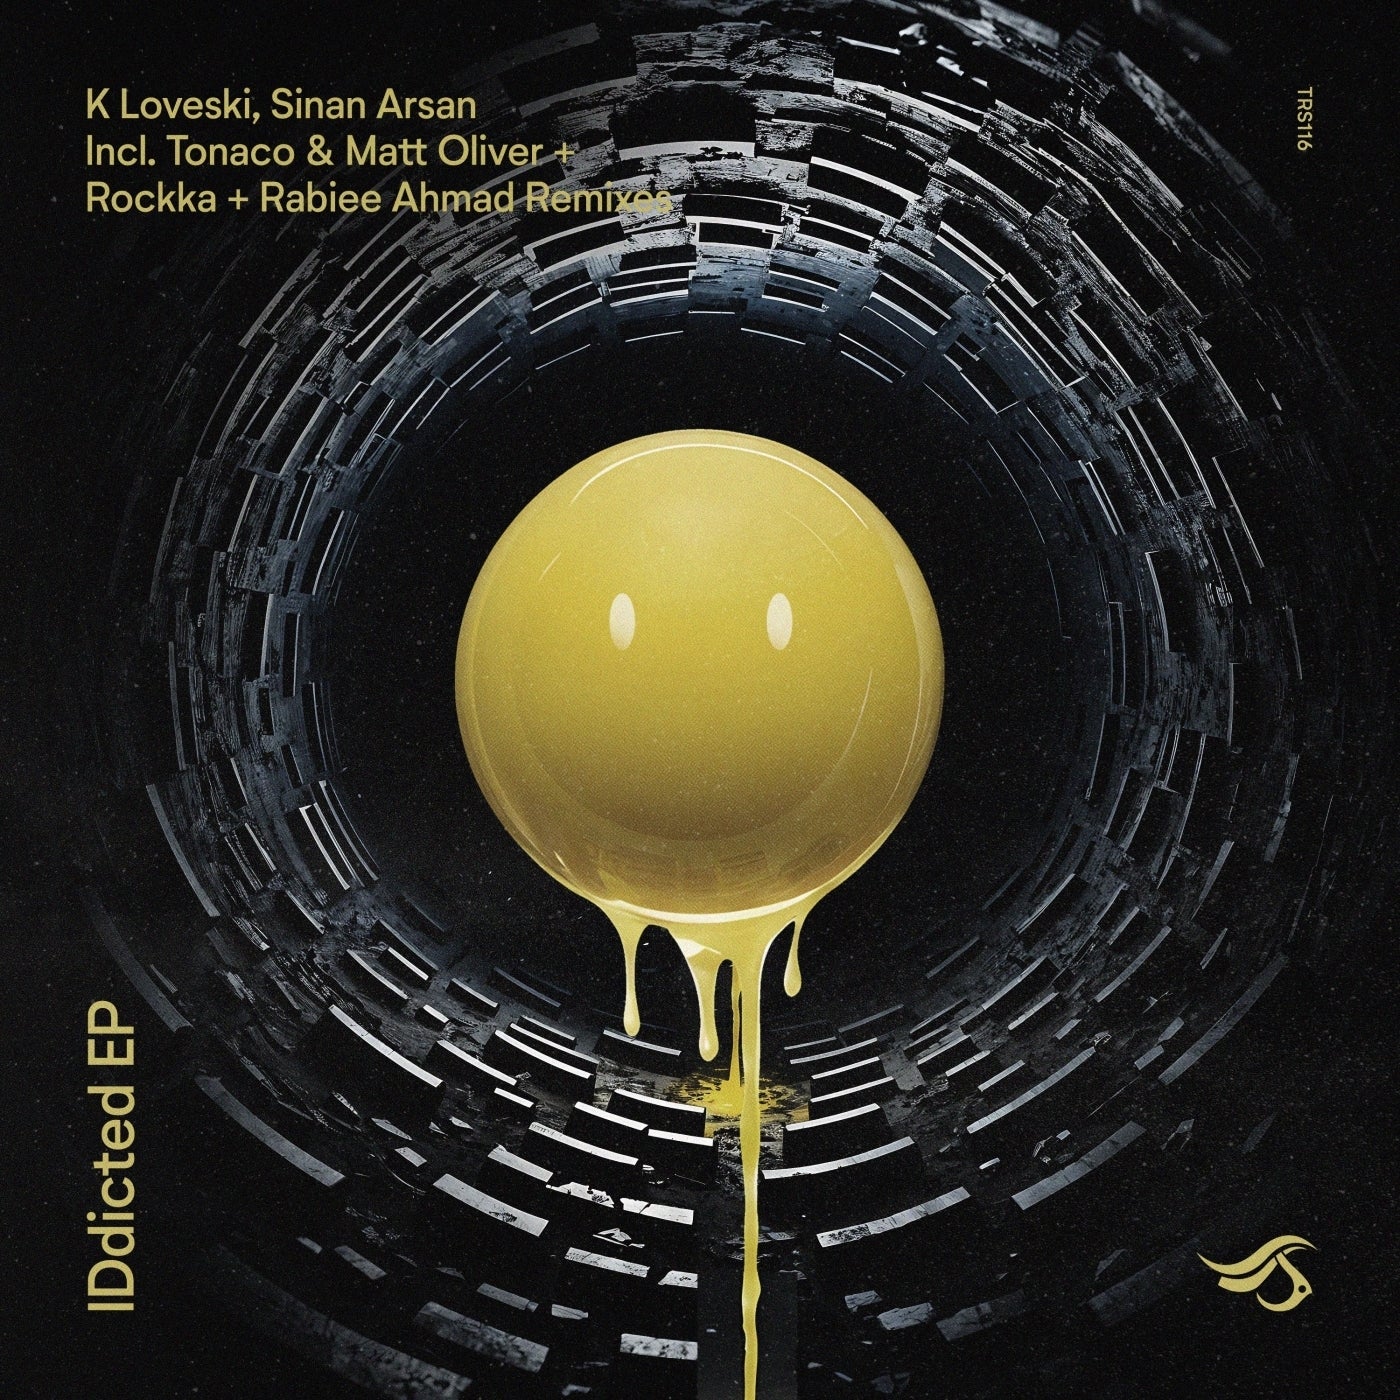 Cover - K Loveski, Sinan Arsan - IDdicted (Rockka Remix)